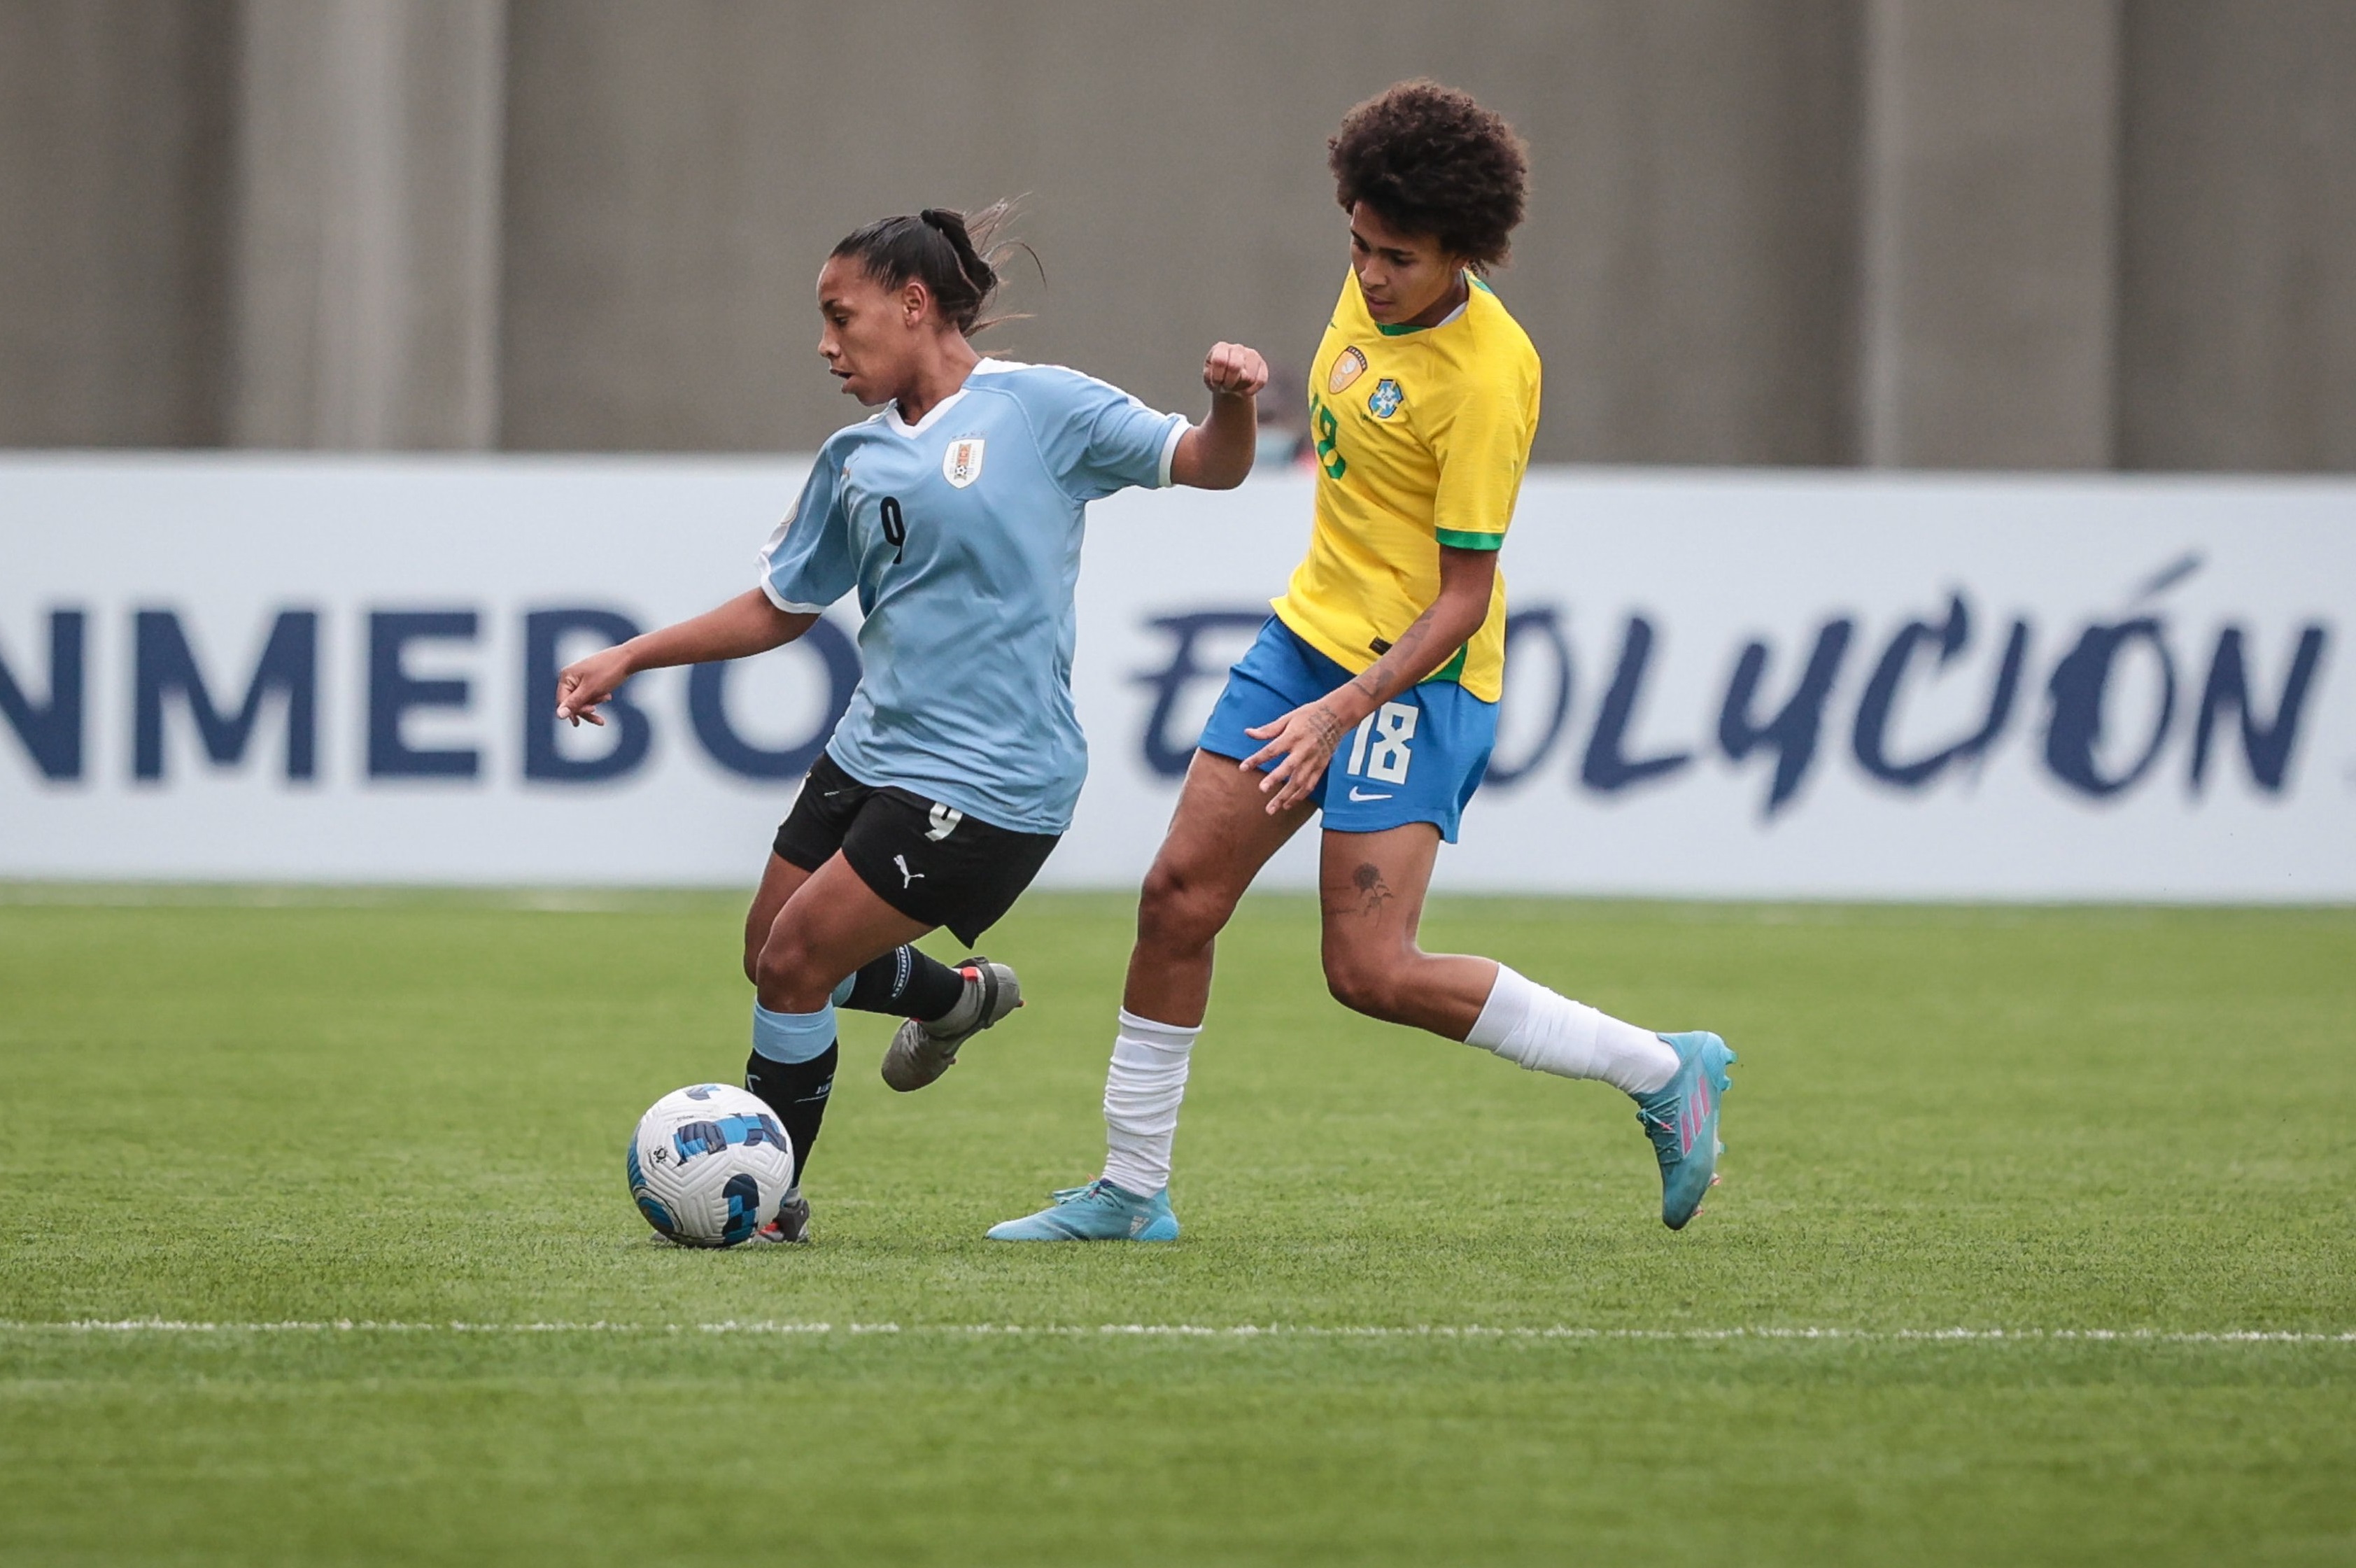 La selección uruguaya femenina es histórica: le ganó a Brasil - Uruguay  Natural Marca Pais - Sitio Oficial